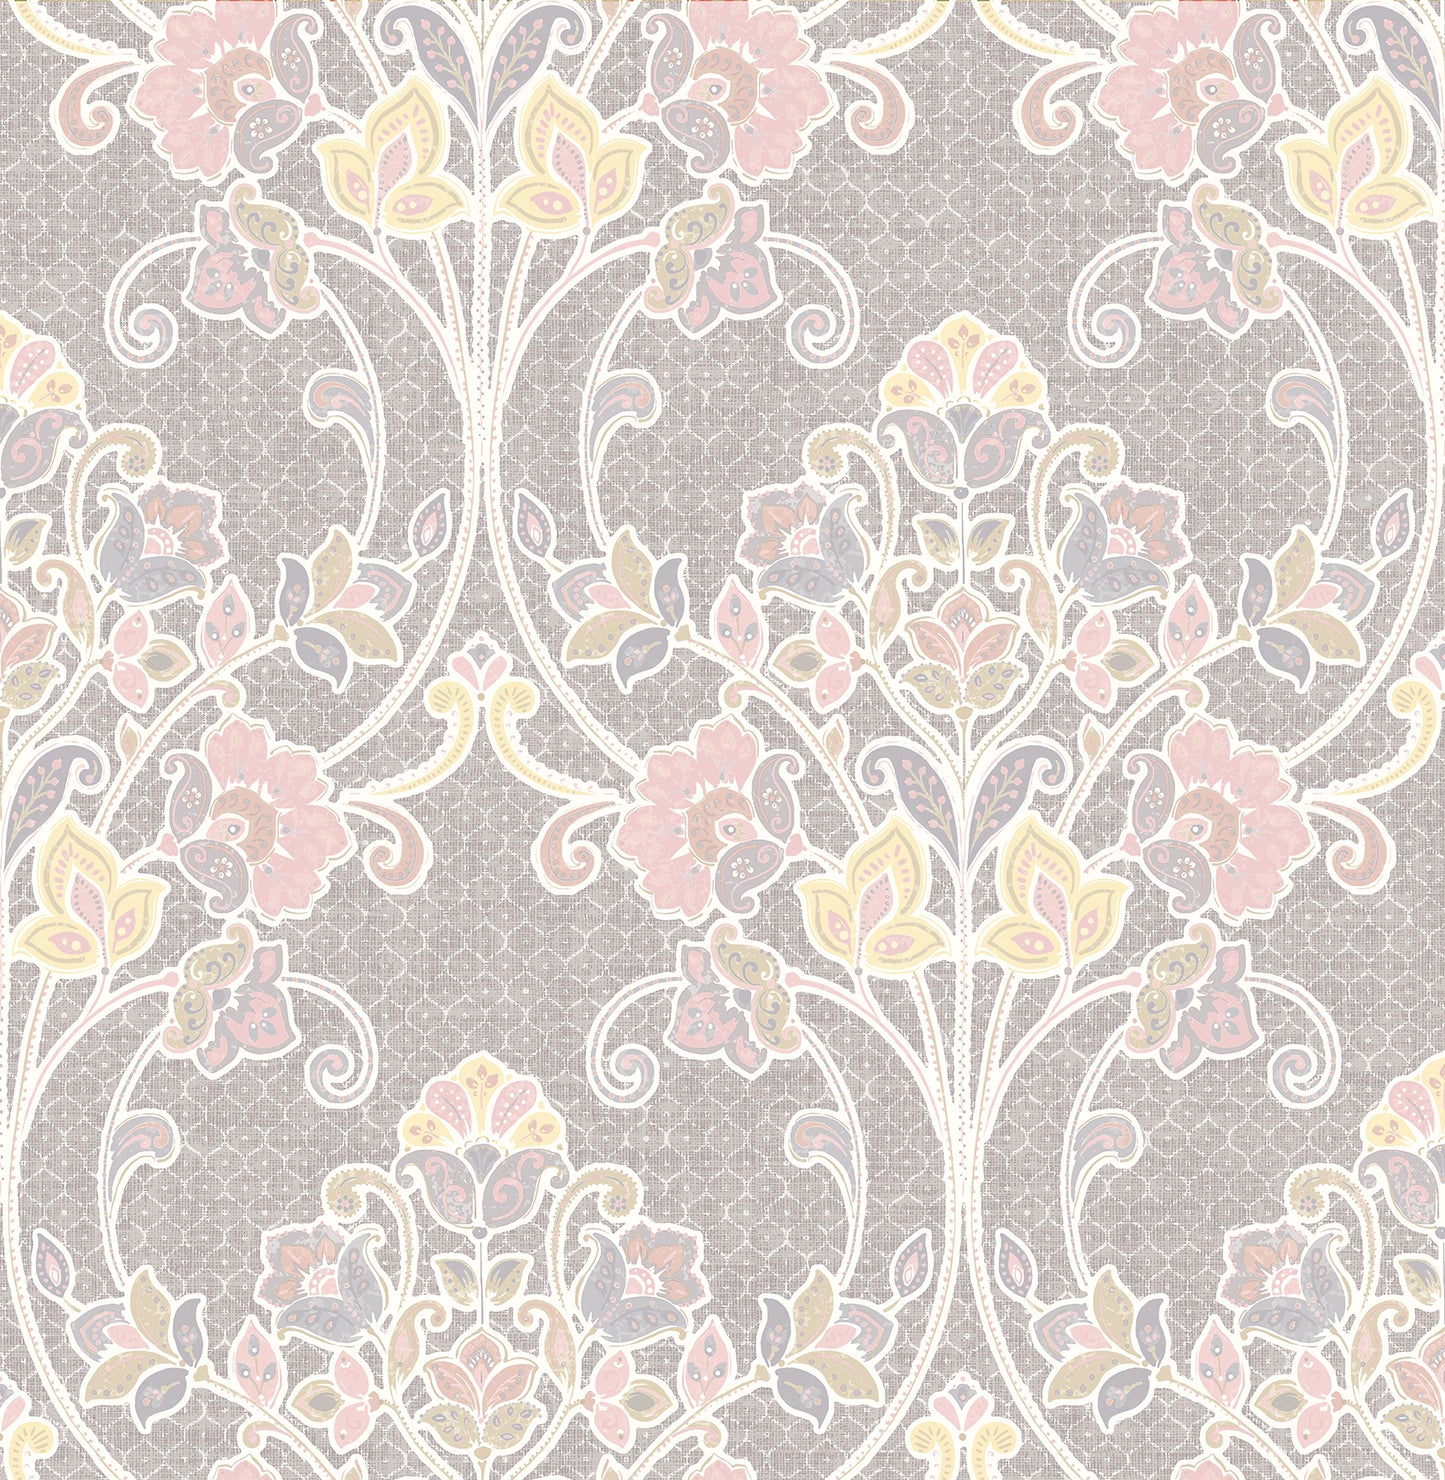 Order 1014-001809 Kismet Pink Willow Pink Nouveau Floral Wallpaper A Street Prints Wallpaper